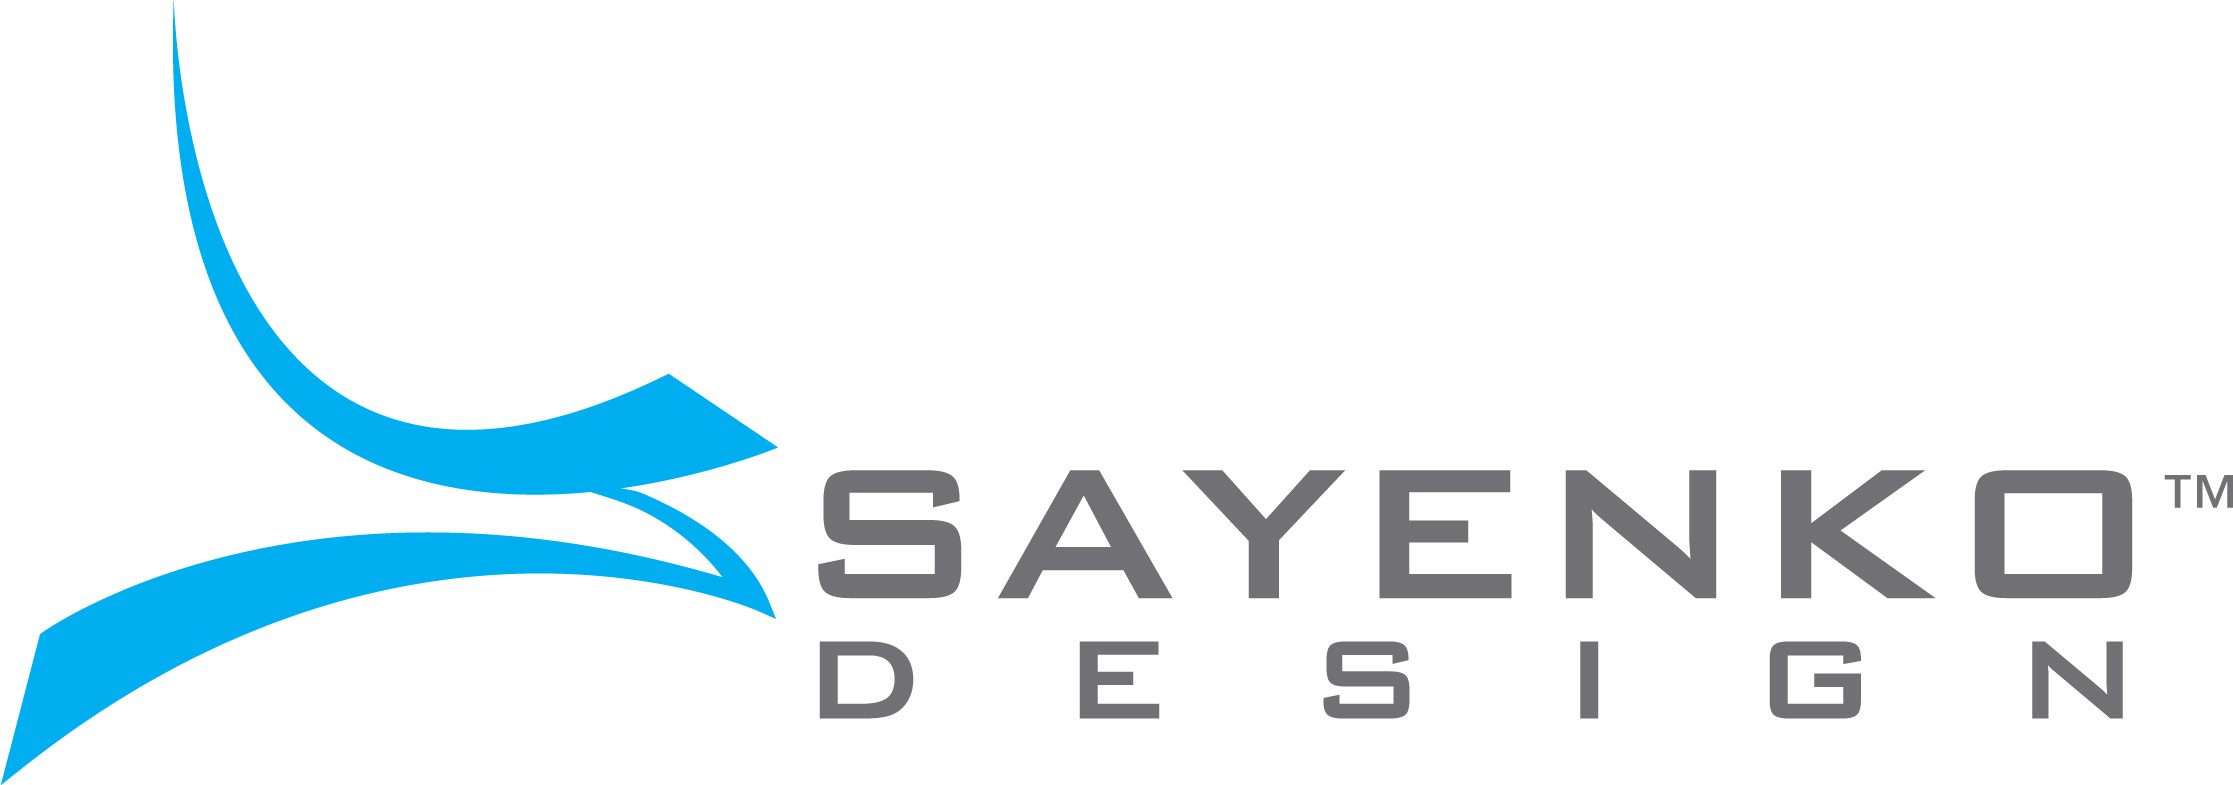 Best Seattle Web Development Firm Logo: Sayenko Design